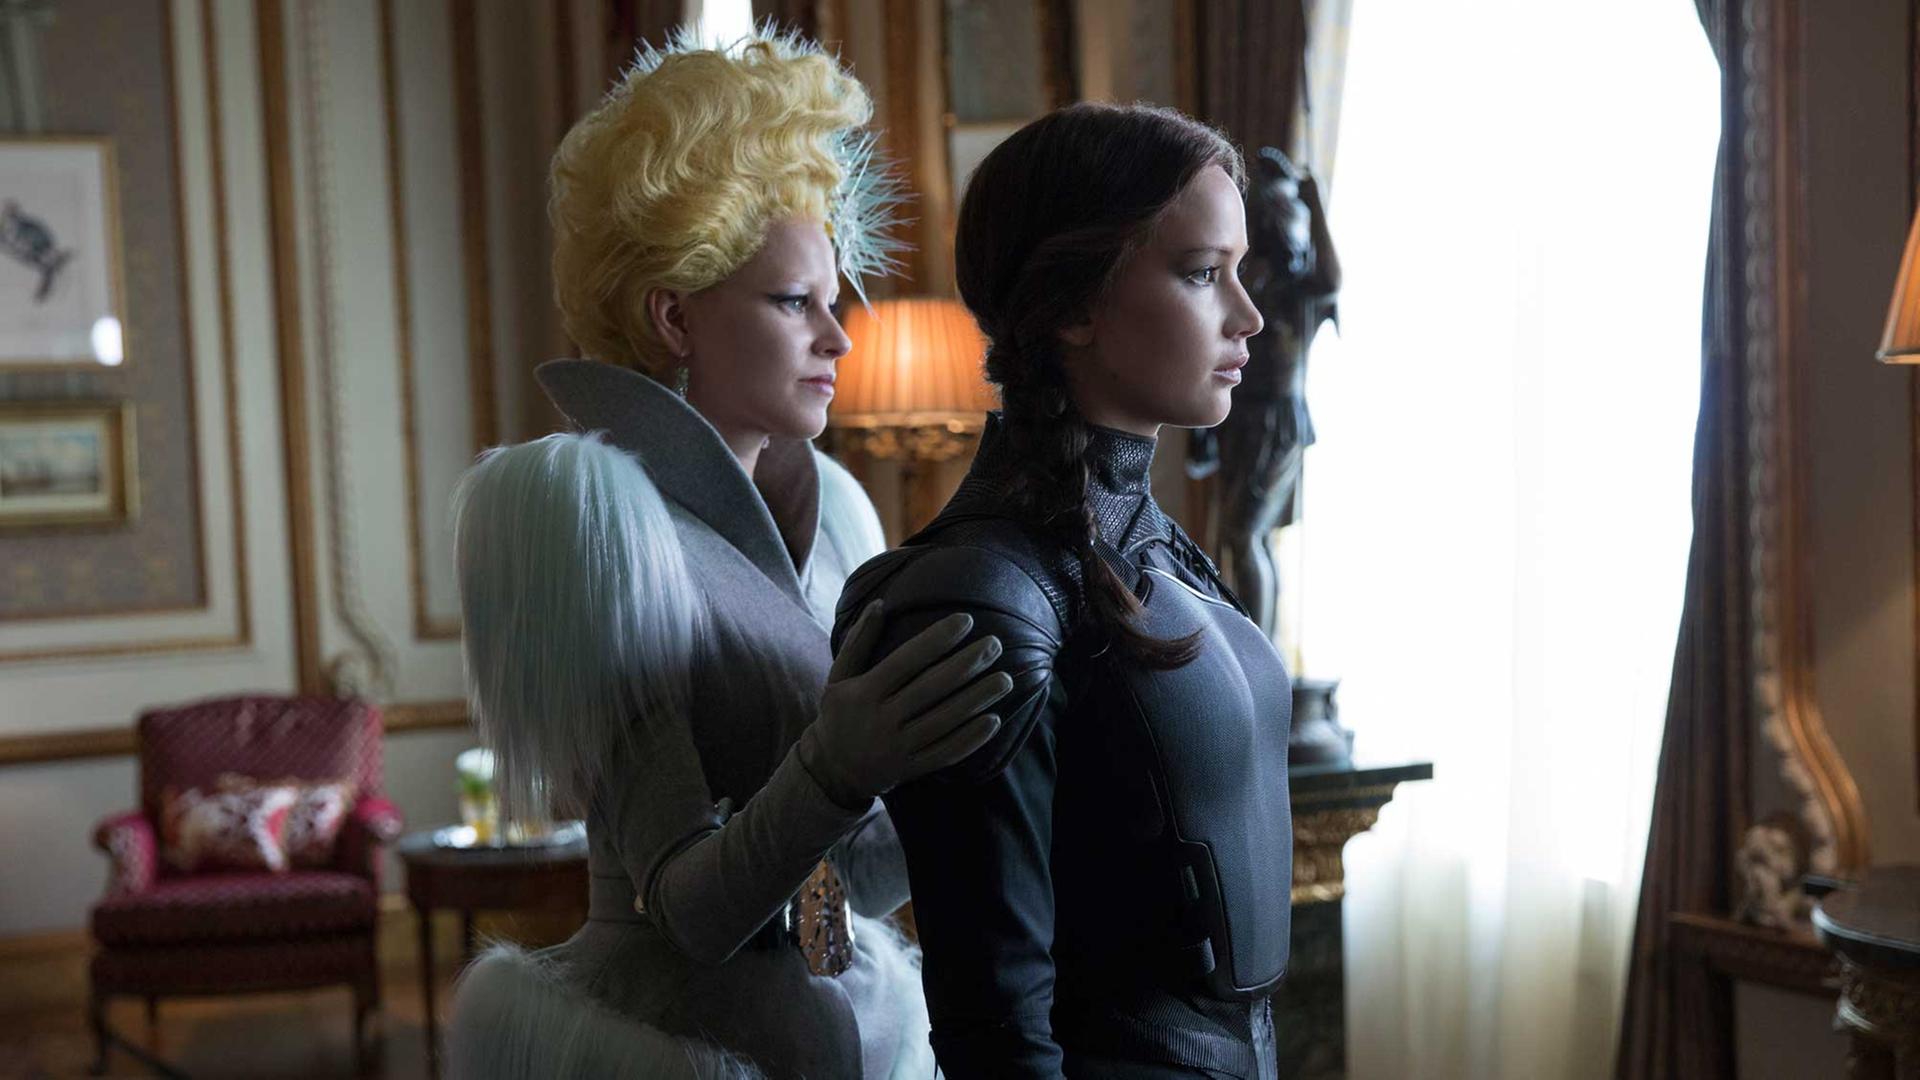 Effie Trinket (Elizabeth Banks, l.) und Katniss Everdeen (Jennifer Lawrence, r.) in "Die Tribute von Panem - Mockingjay Teil 2"